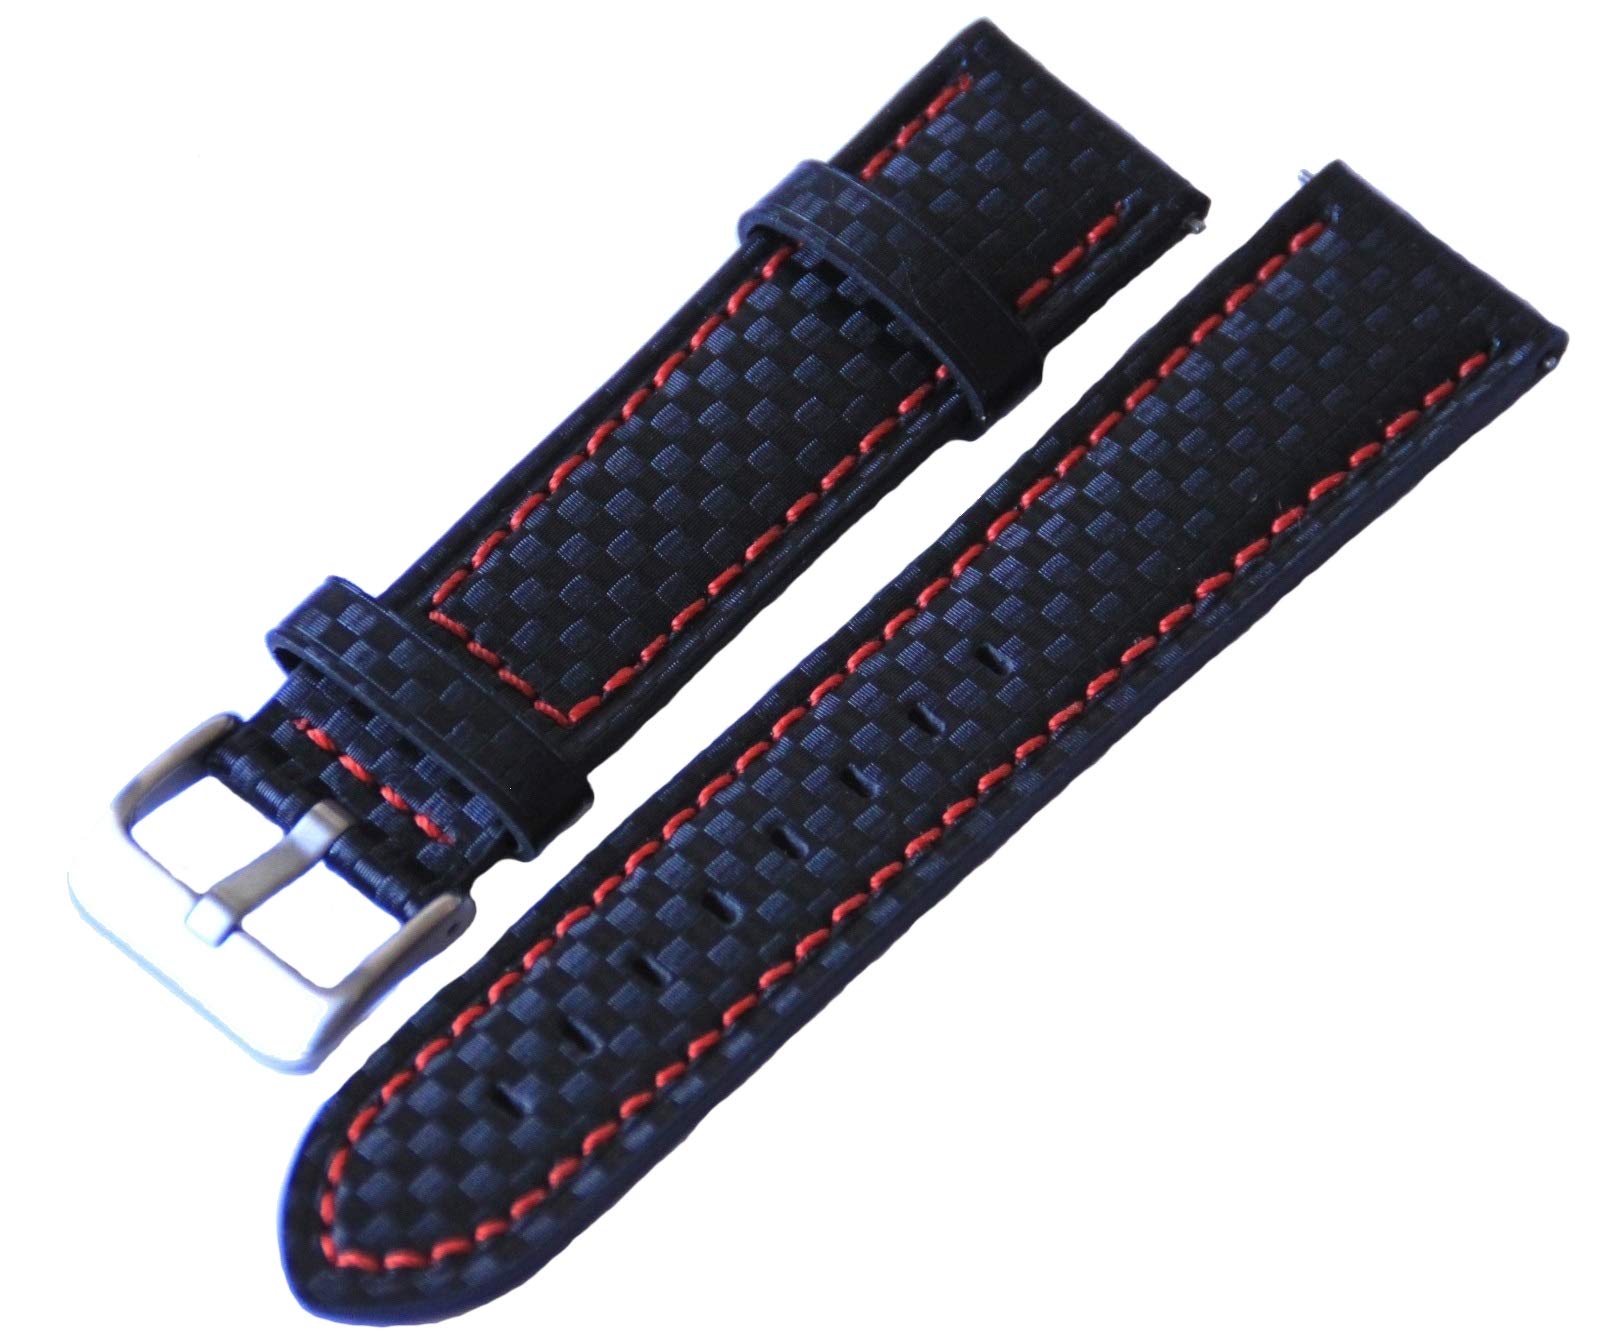 Eichmüller 22mm BandOh Leder Uhren Armband Schwarz Ersatzband mit roter Naht